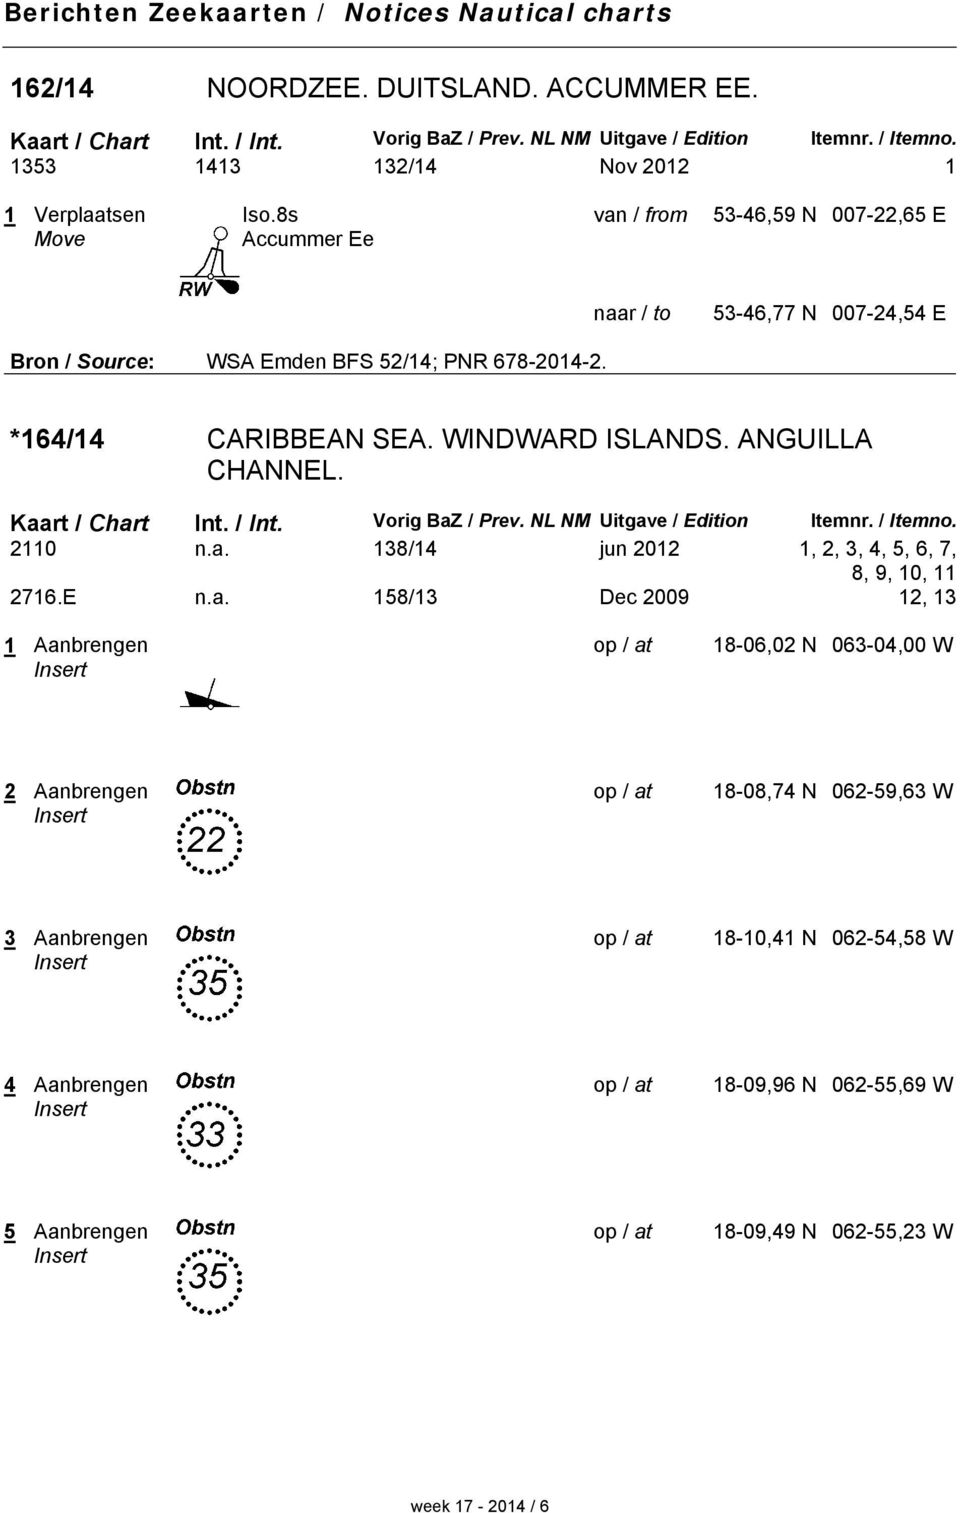 *164/14 CARIBBEAN SEA. WINDWARD ISLANDS. ANGUILLA CHANNEL. Kaart / Chart Int. / Int. Vorig BaZ / Prev. NL NM Uitgave / Edition Itemnr. / Itemno. 2110 n.a. 138/14 jun 2012 1, 2, 3, 4, 5, 6, 7, 8, 9, 10, 11 2716.